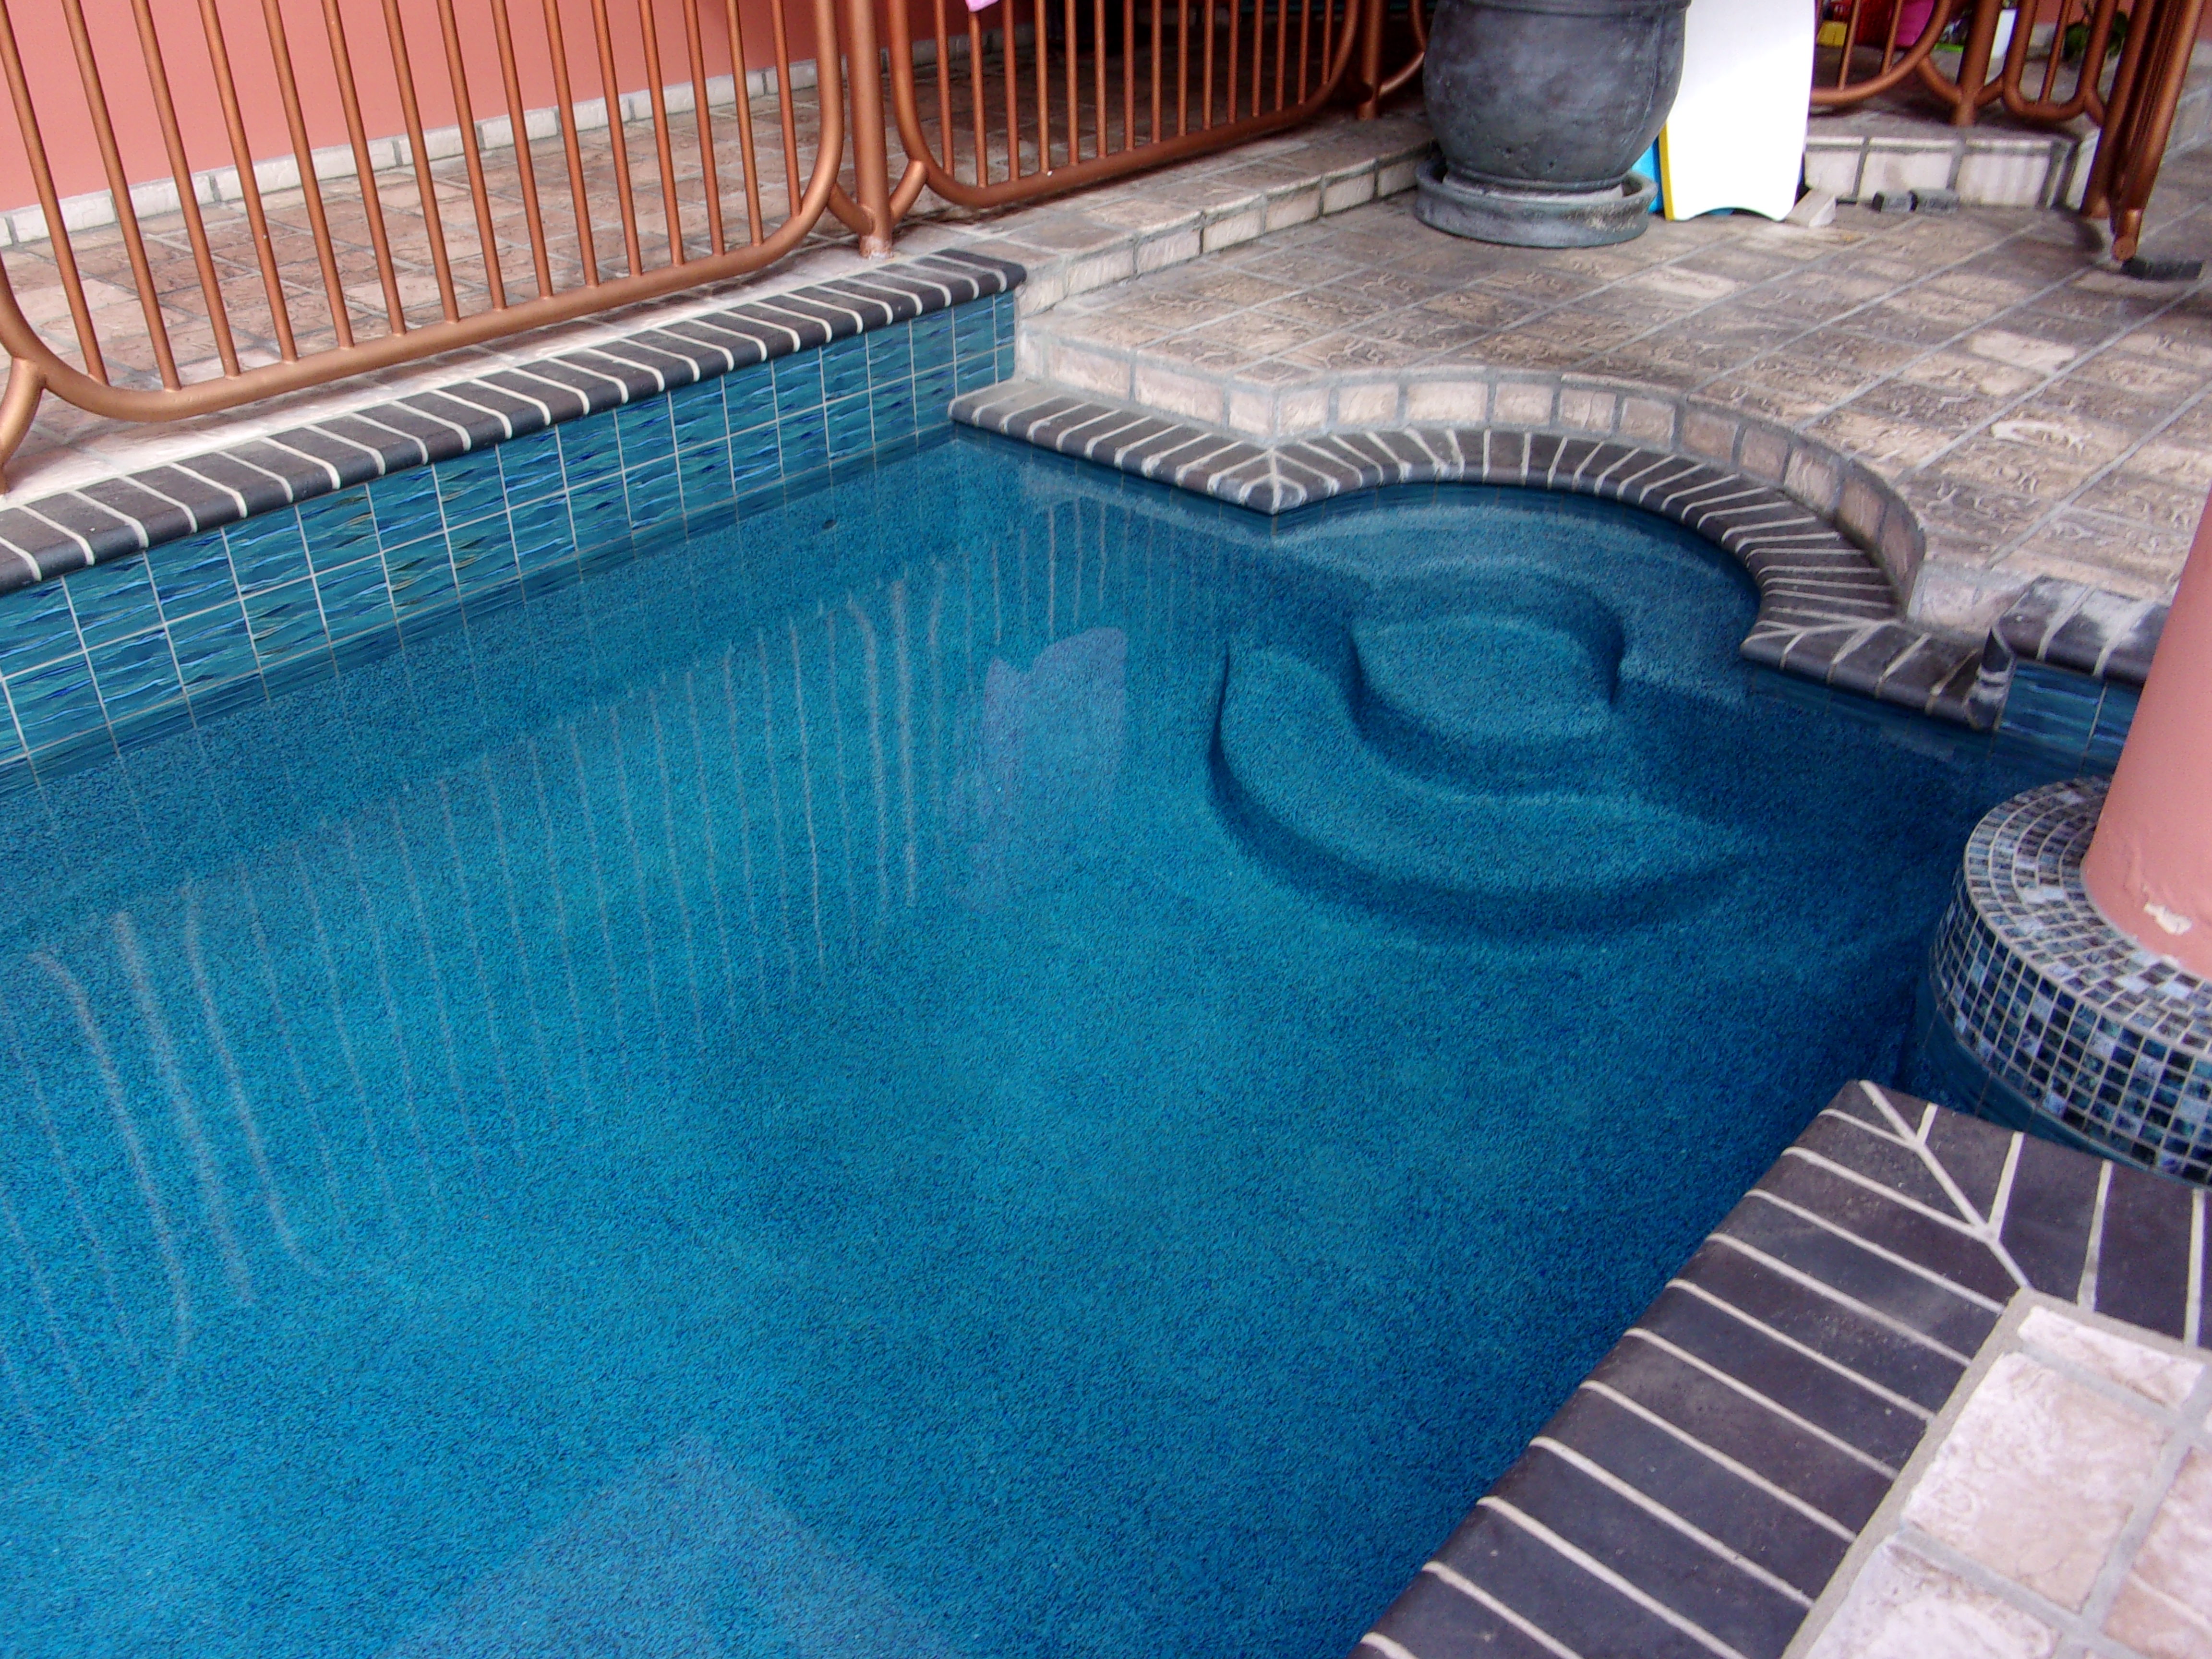 Pool tile, green and blue pool tile, Greenish blue pool tile